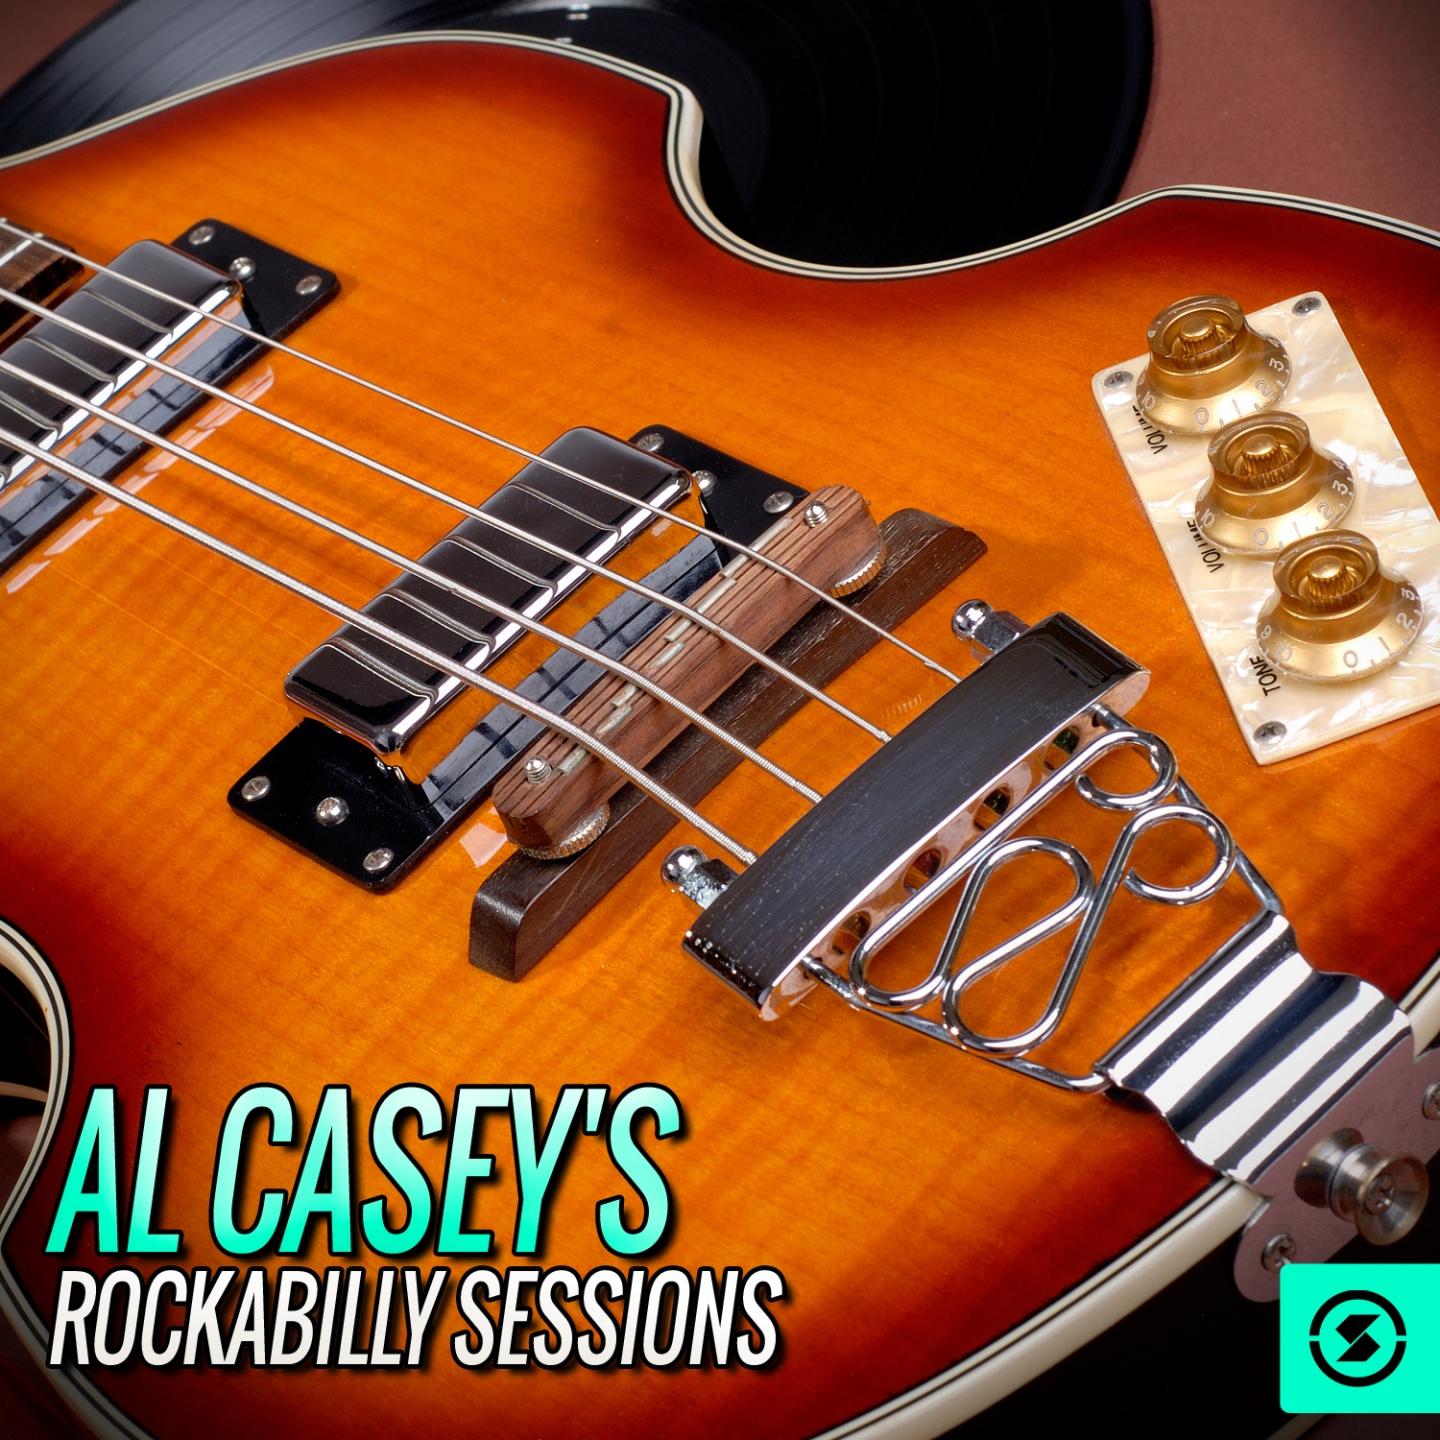 Al Casey's Rockabilly Sessions